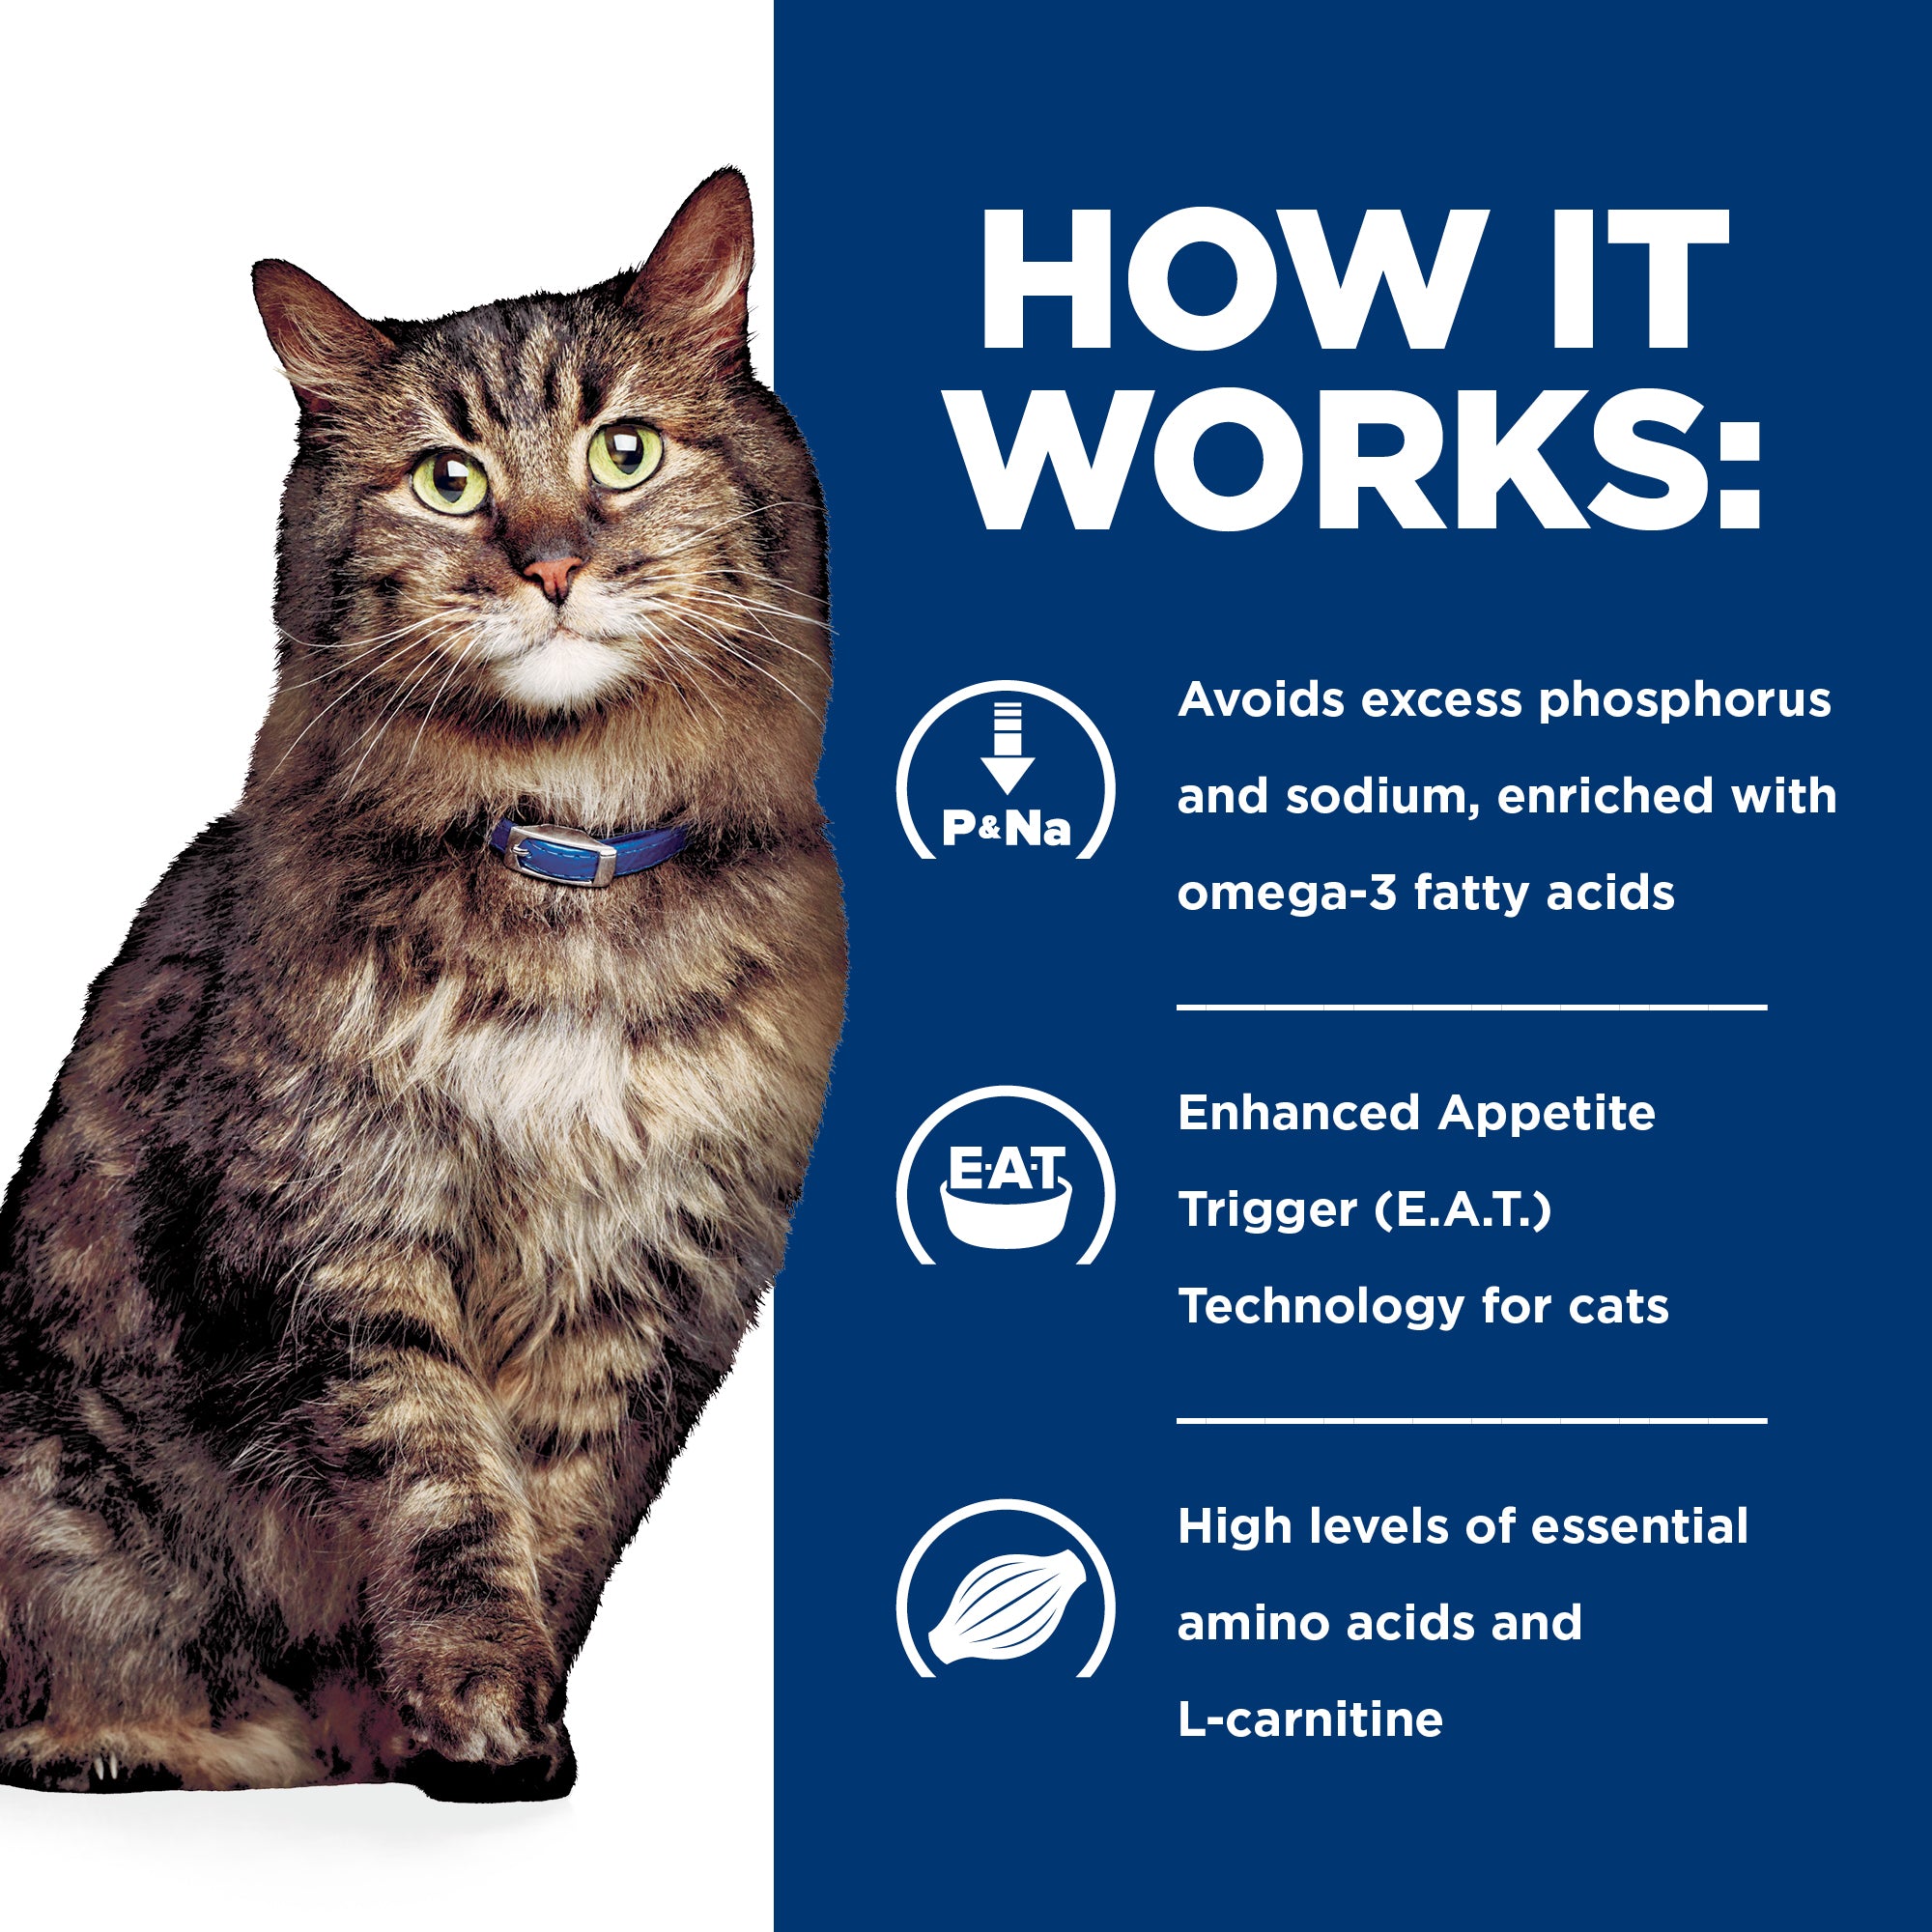 Hill's® Prescription Diet® k/d® Kidney Care Early Support Feline Chicken Dry Cat Food